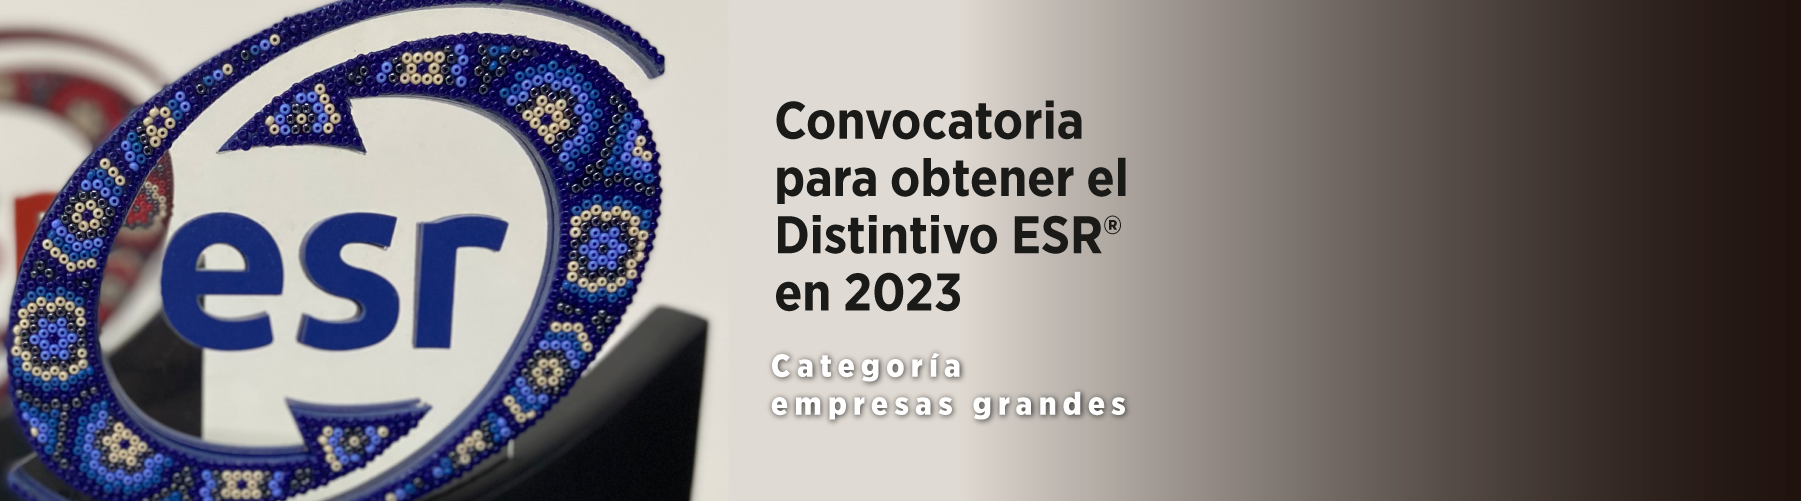 Convocatoria Distintivo ESR empresas grandes 2023